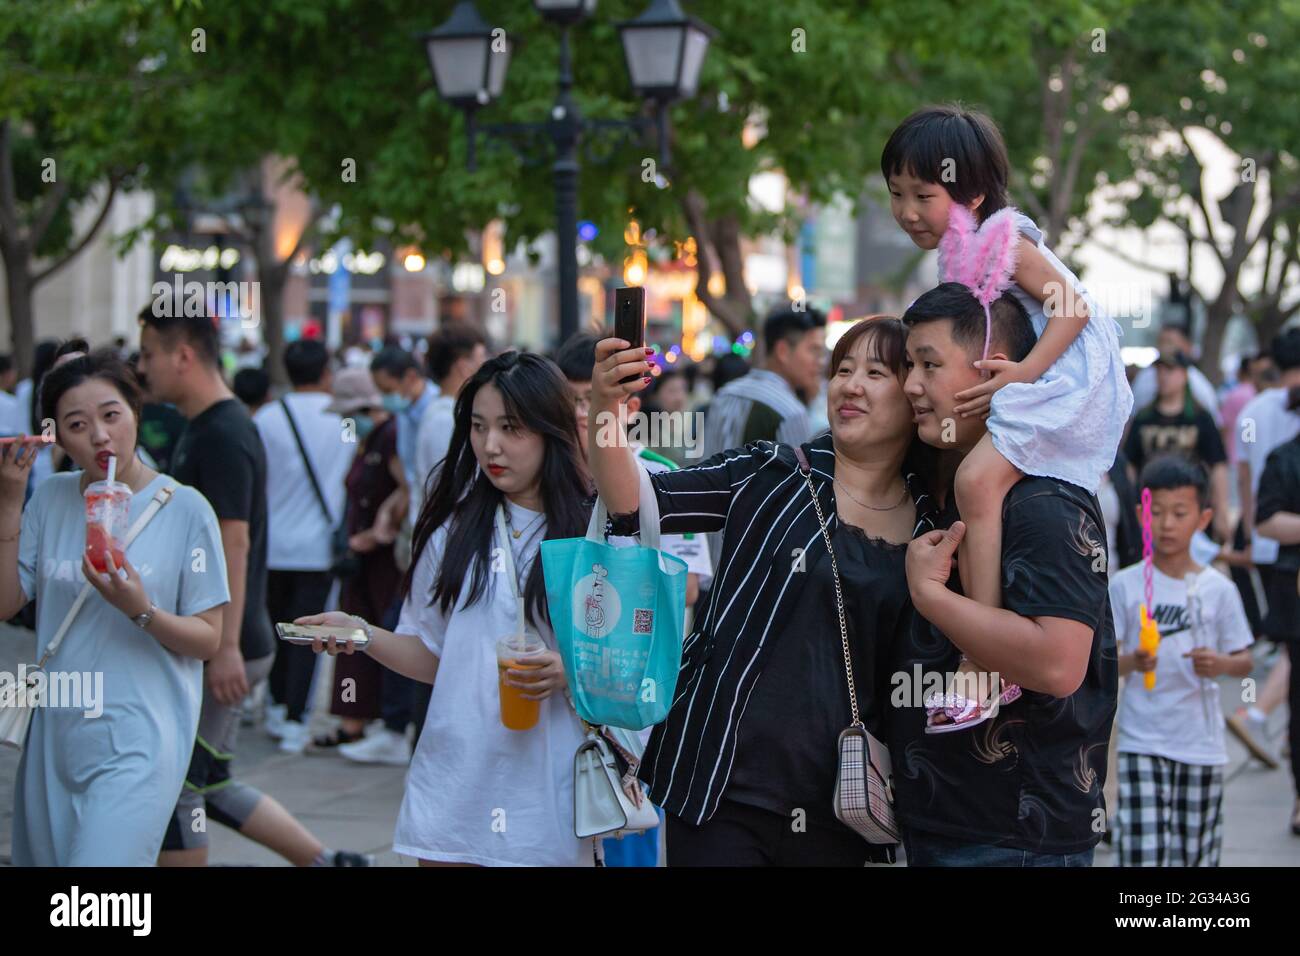 Dating chinese girl in Harbin